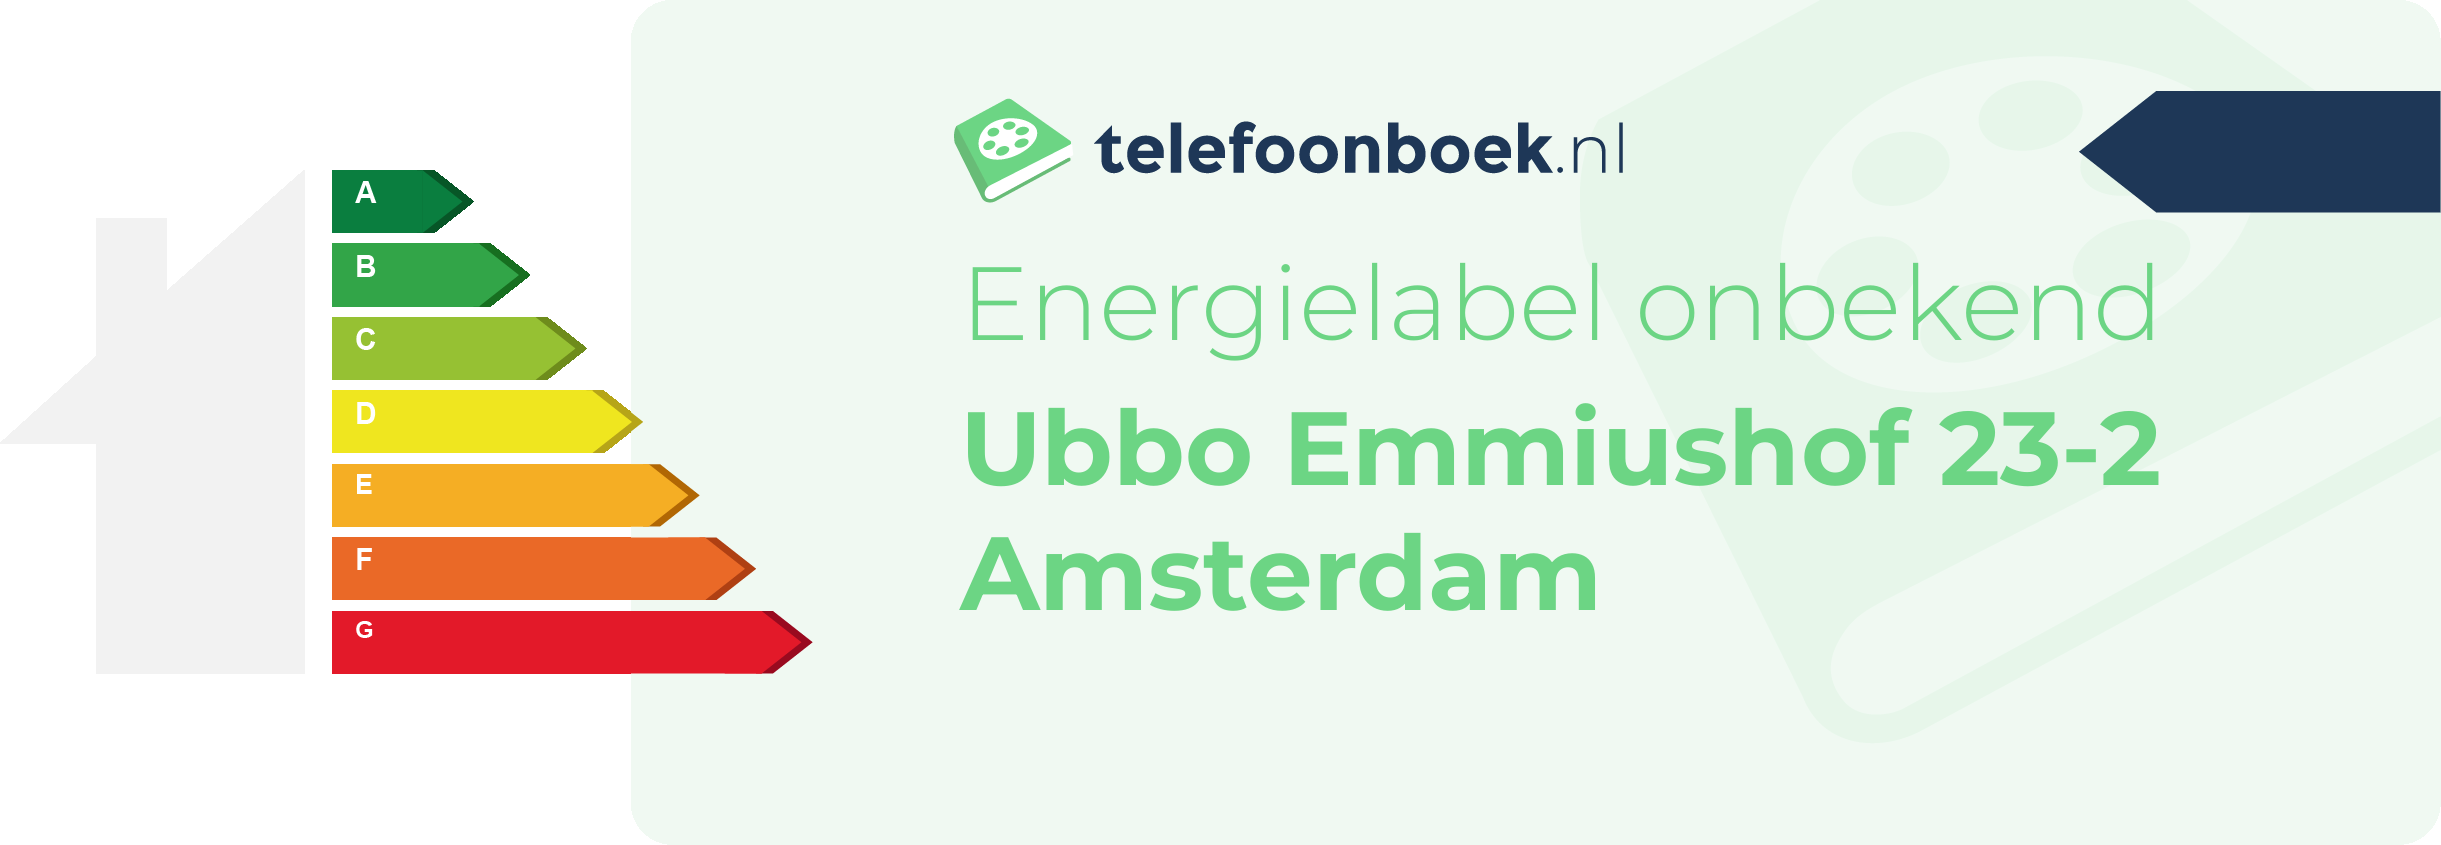 Energielabel Ubbo Emmiushof 23-2 Amsterdam